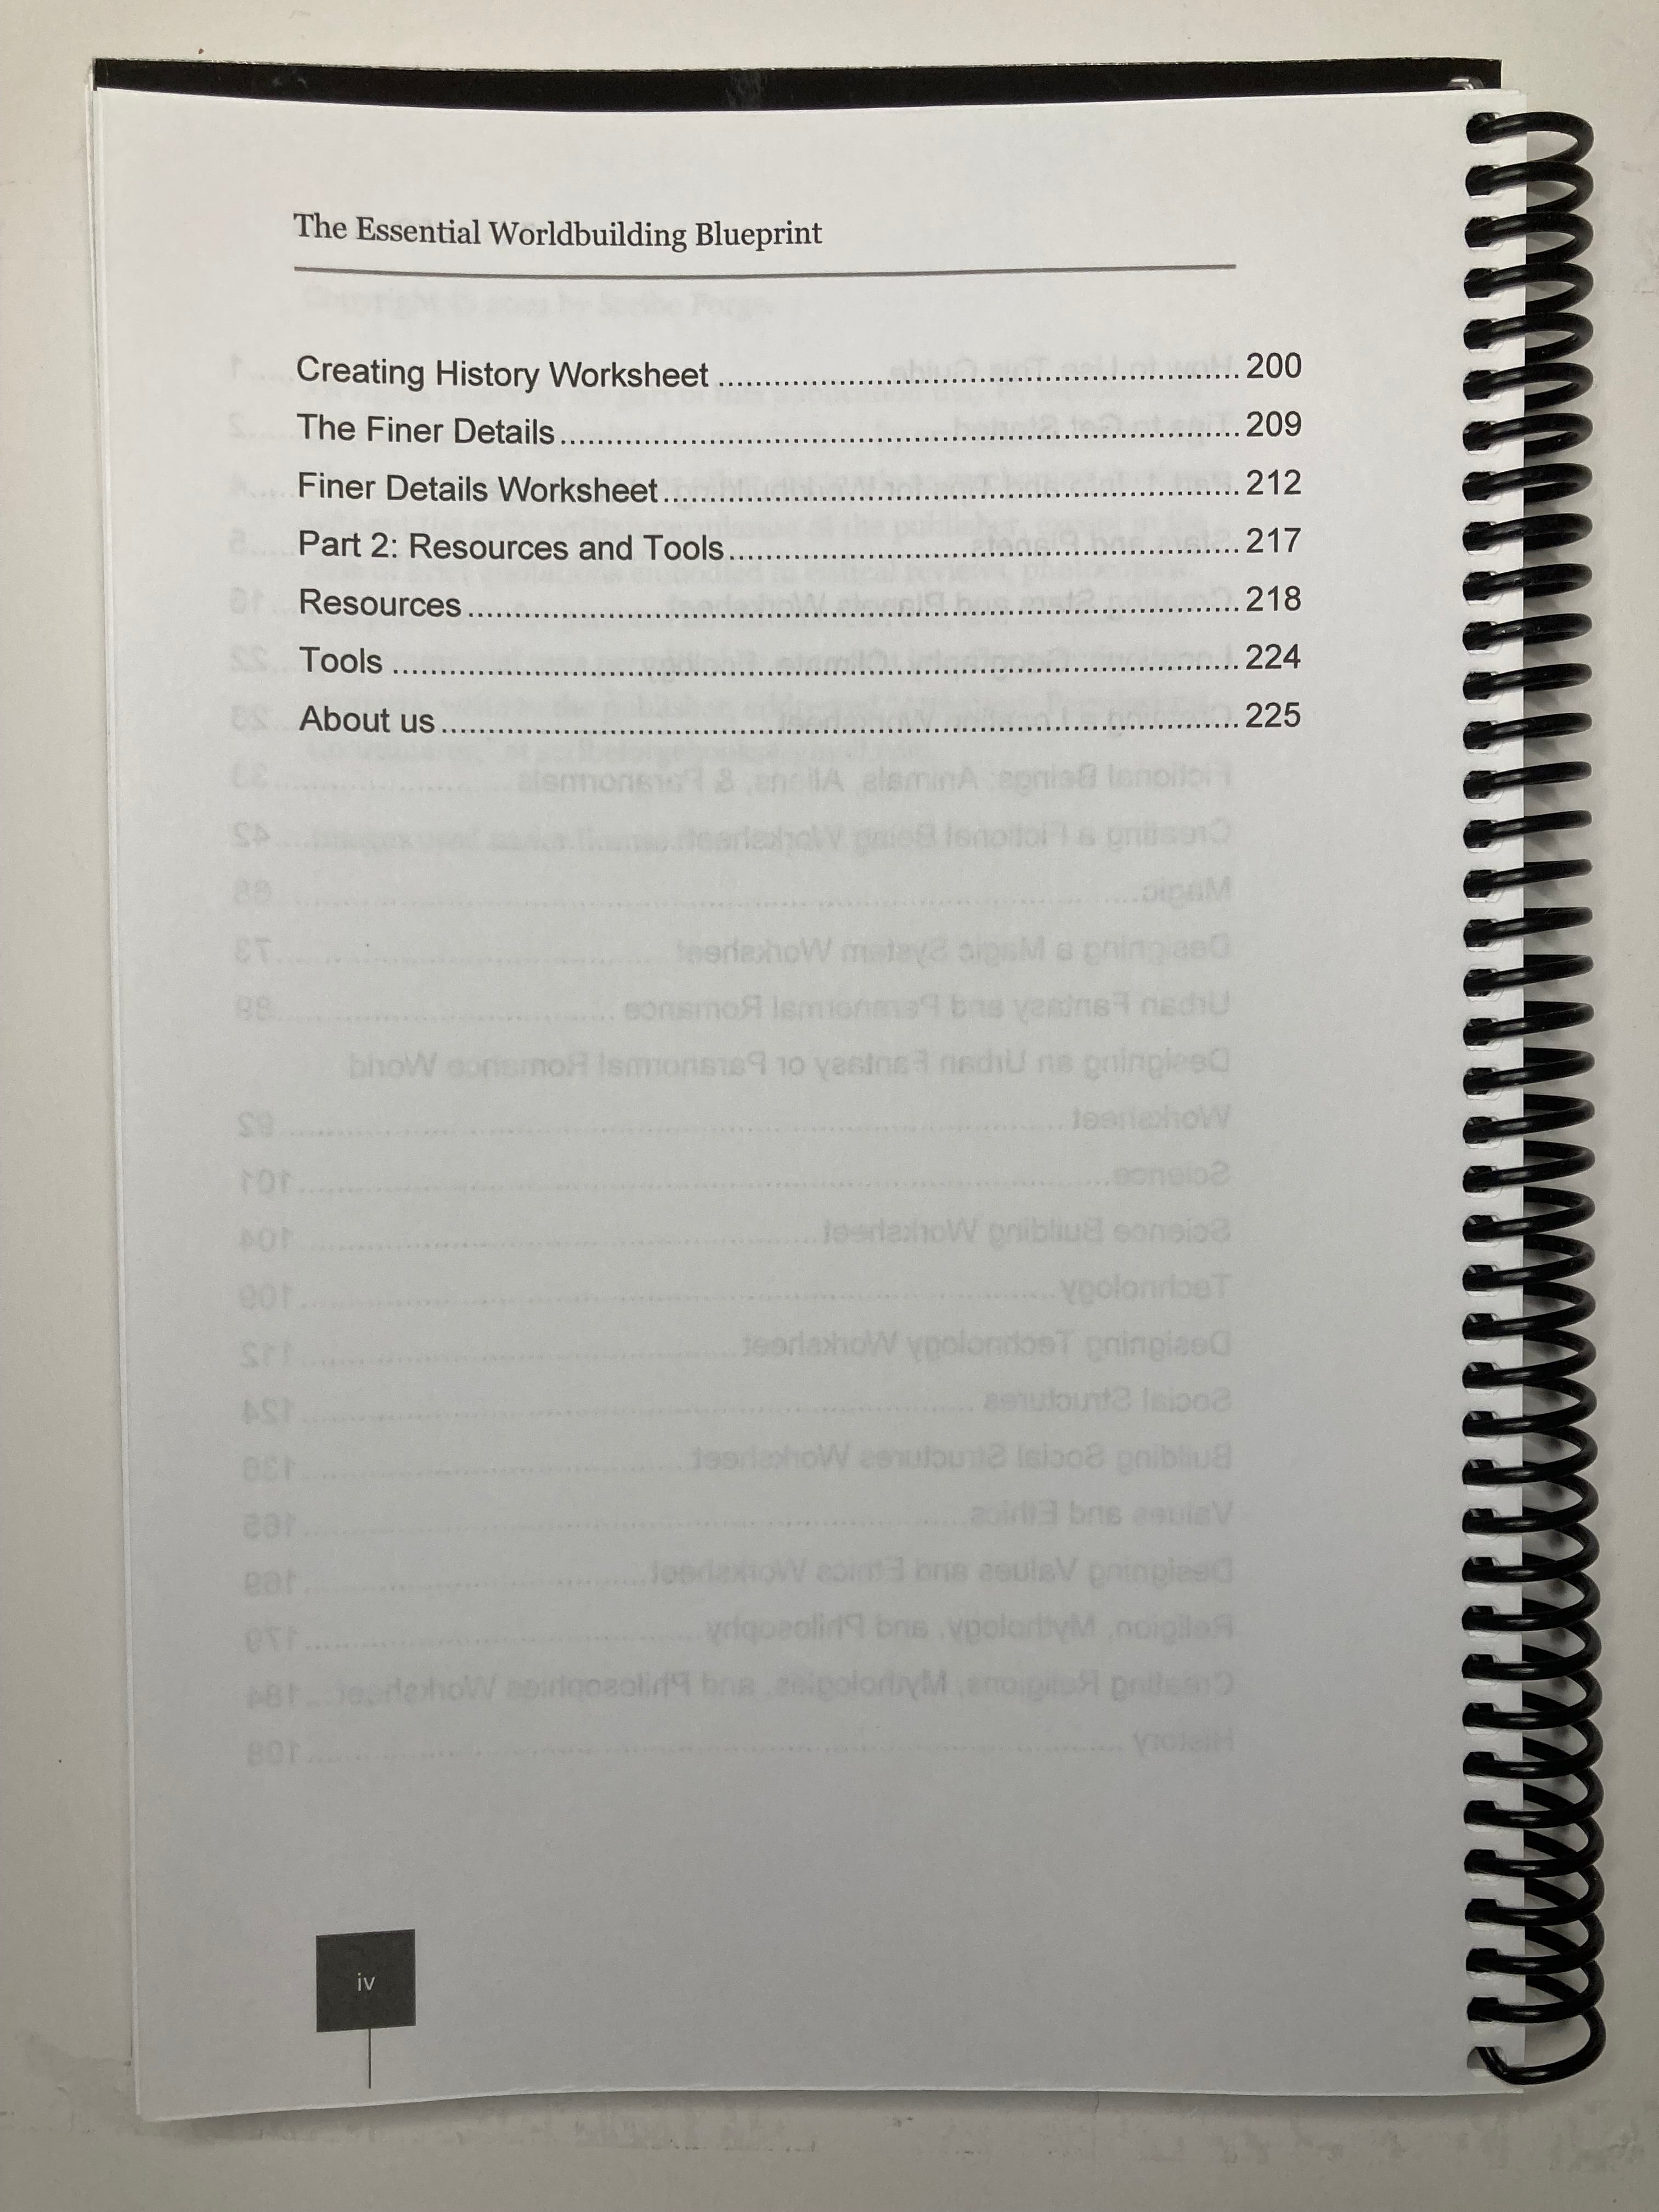 The Essential Worldbuilding Blueprint and Workbook - Scrivener - Scribe Forge